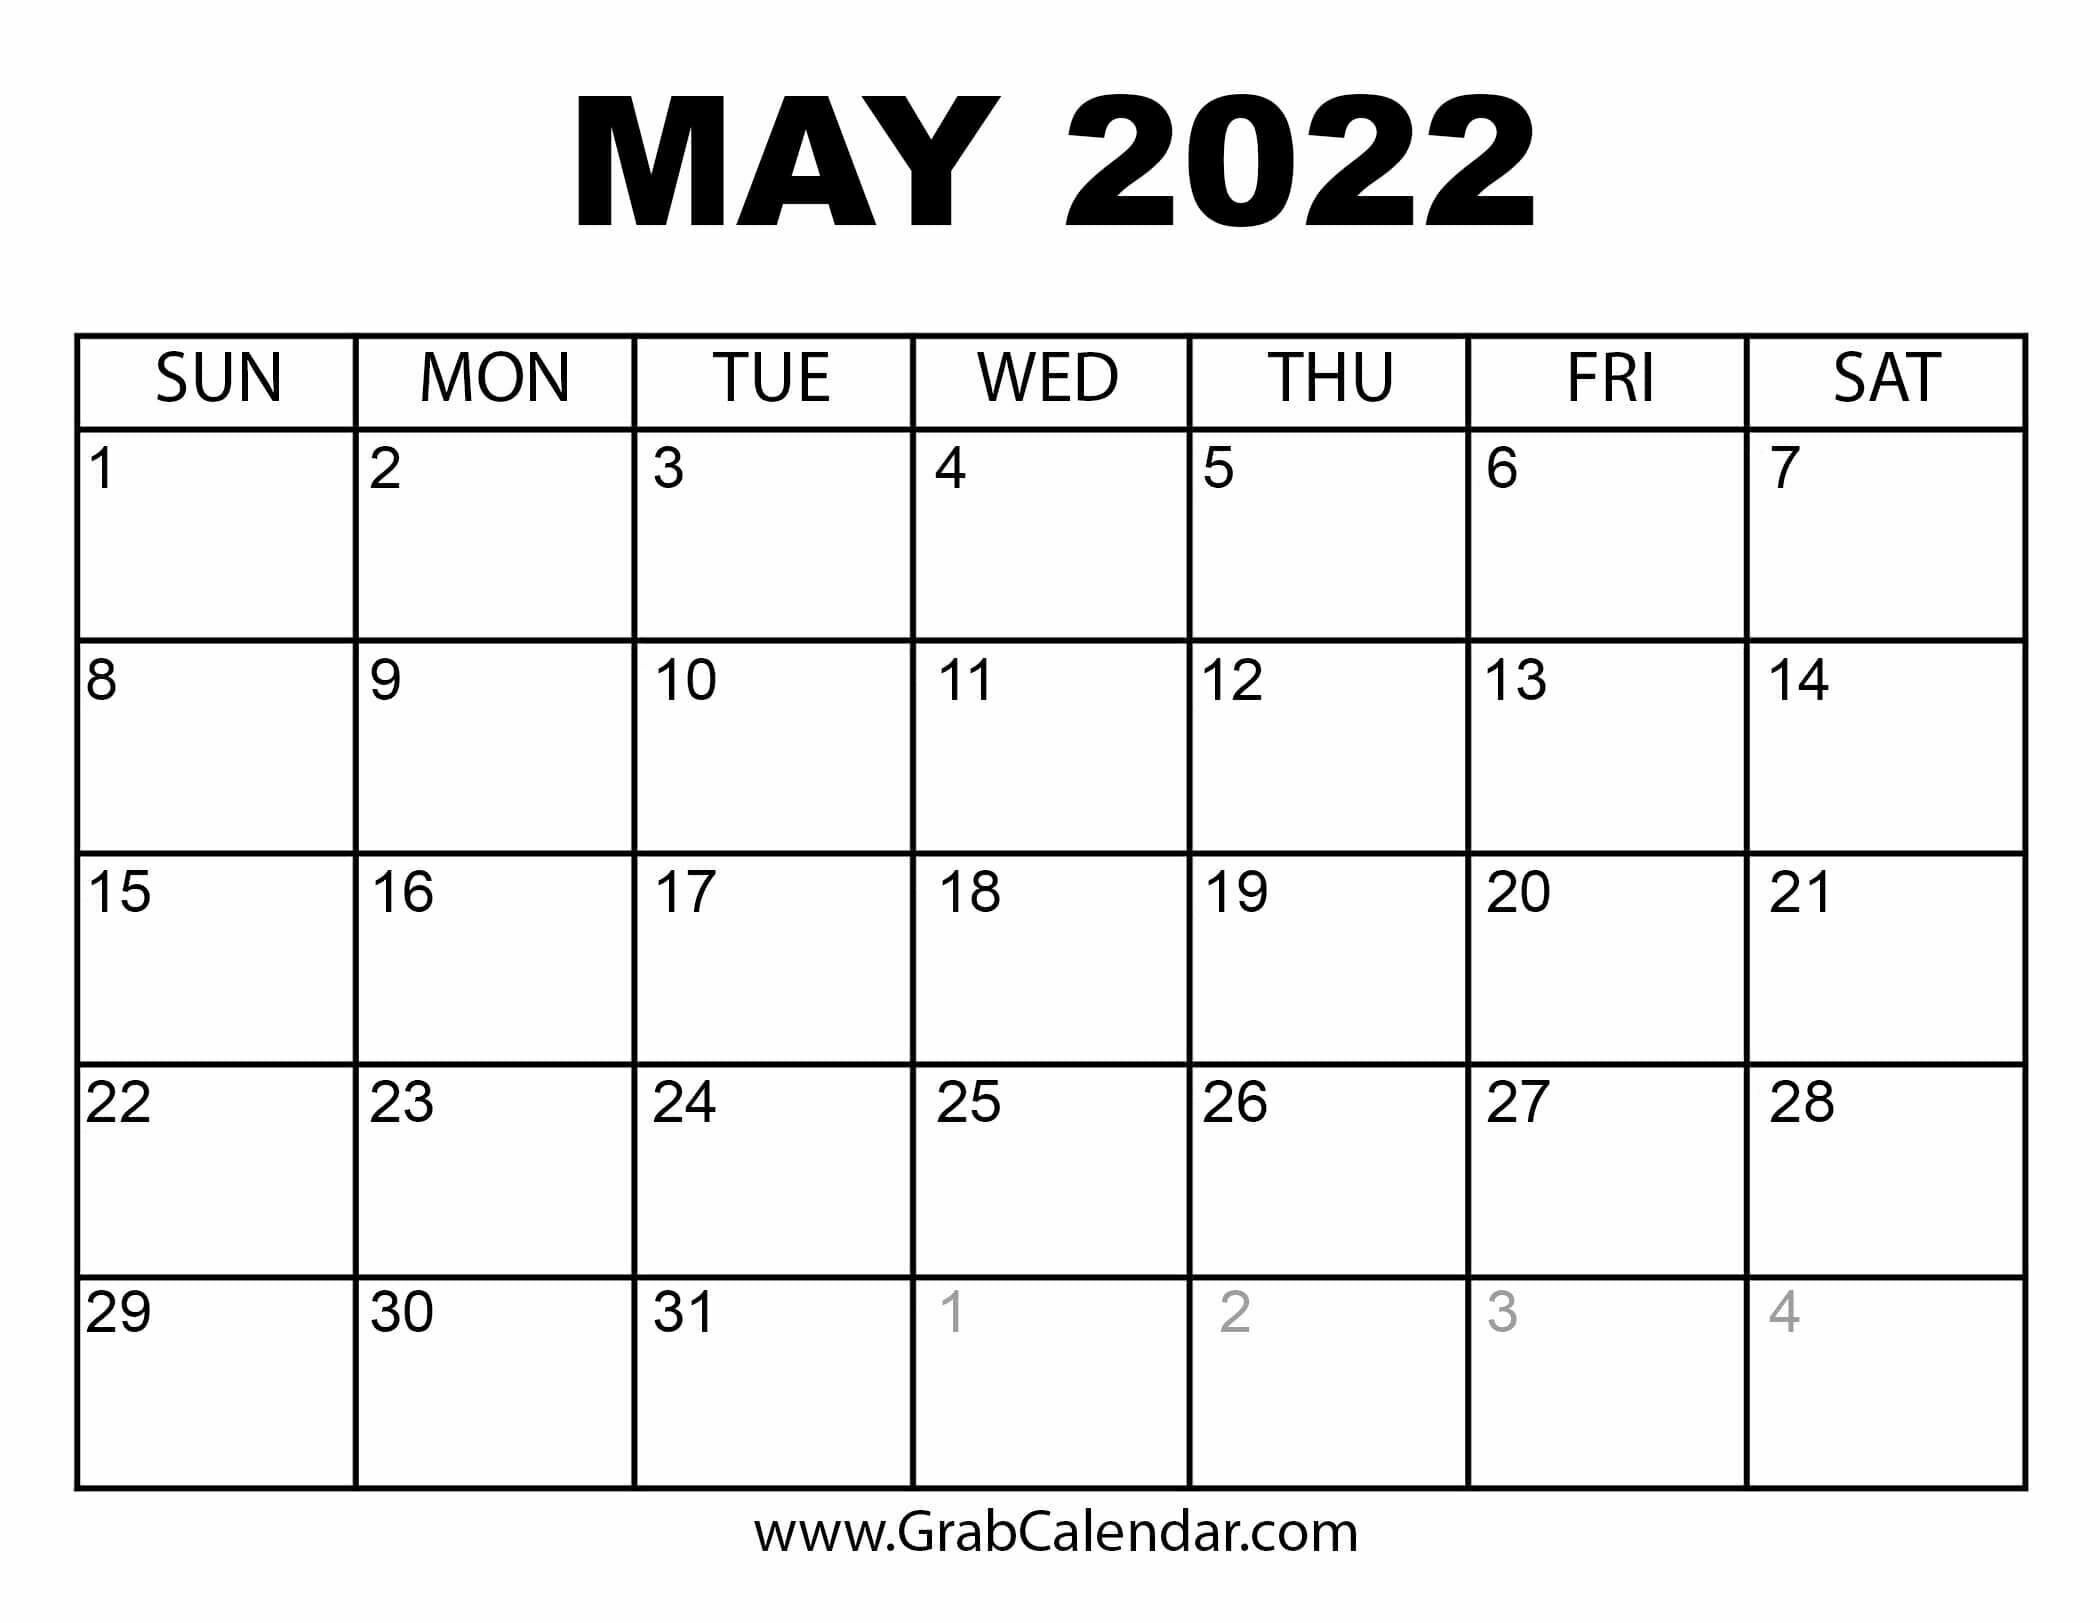 Avatar: May 2022 Calendar